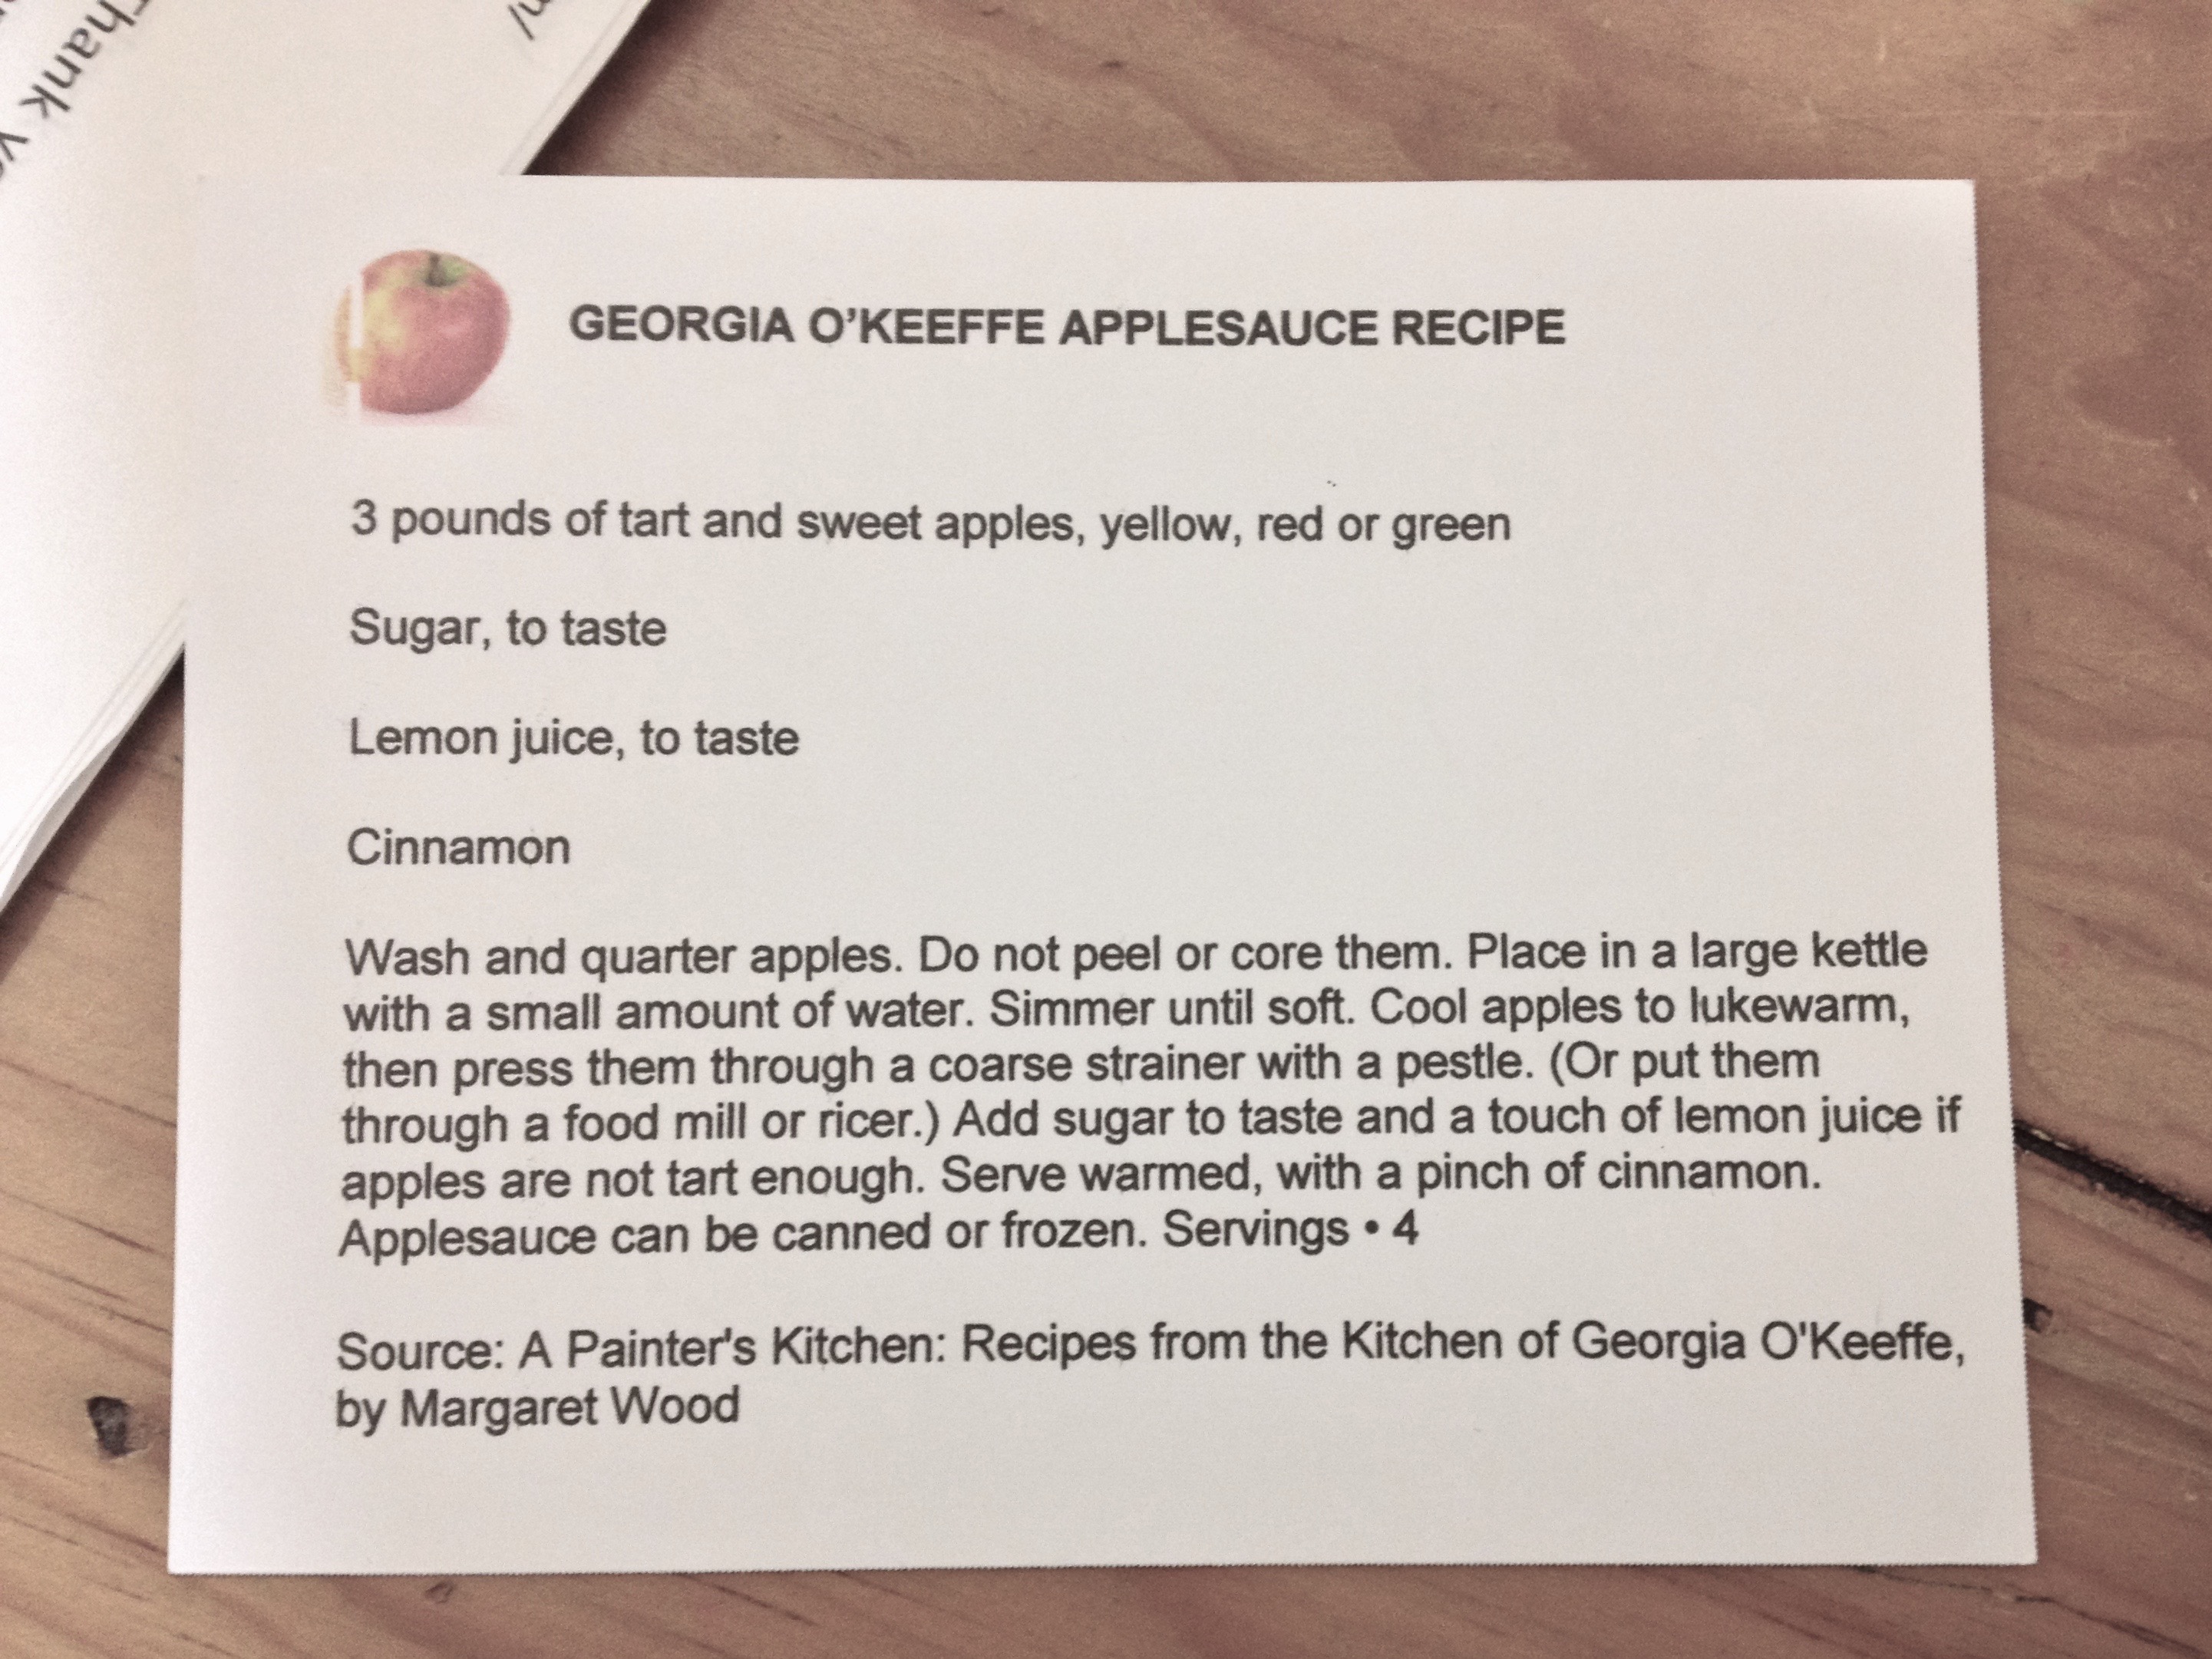 Georgia O’Keeffe’s applesauce recipe